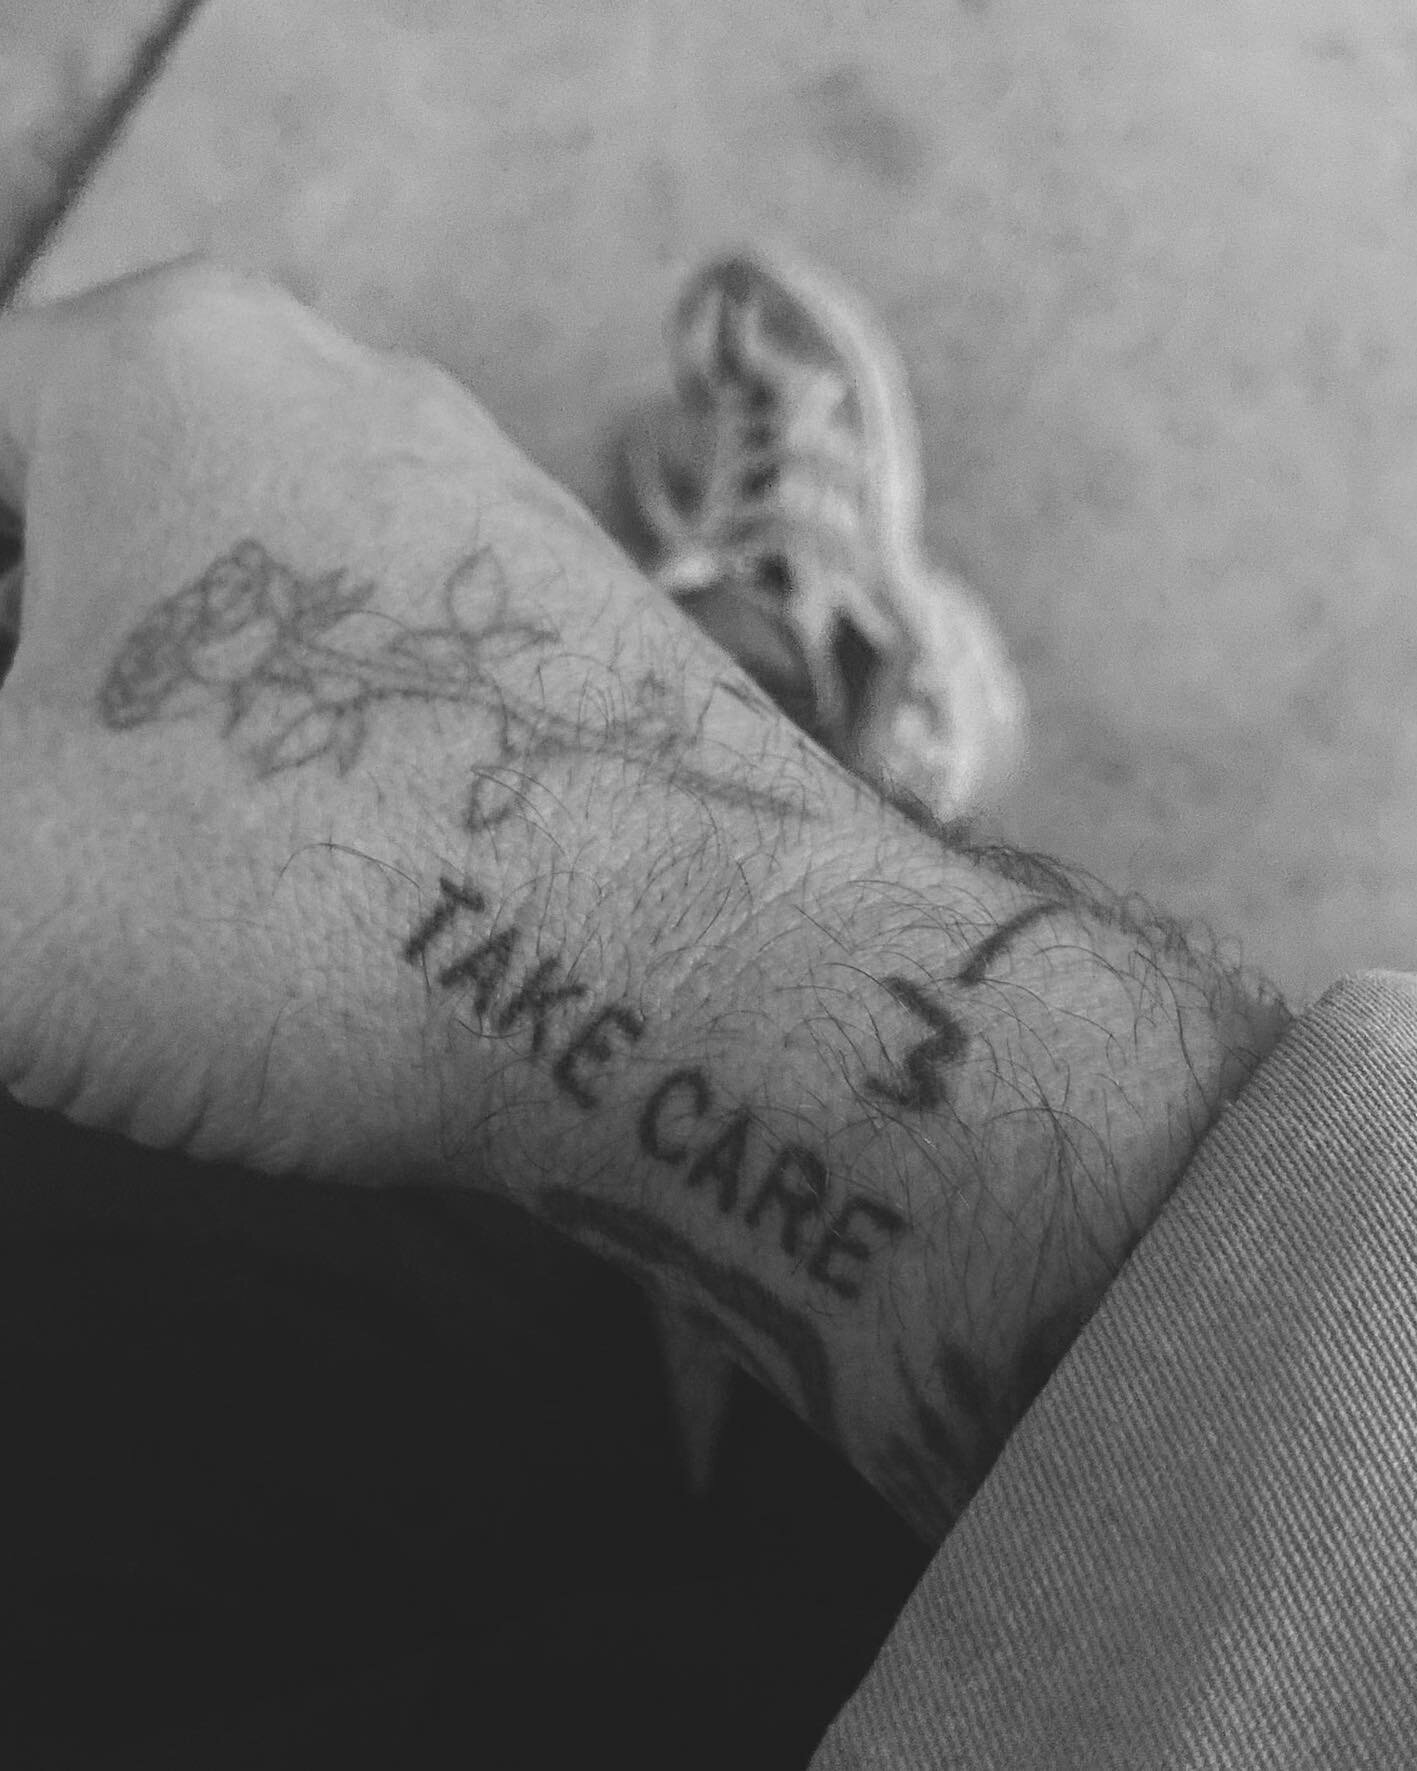 T A K E  C A R E  2023 
🫶🏼
.
.
.
#selfcare #takecareofyourskin #takecare #organicskincare #newyear #esthetician #skincare #venice #losangeles